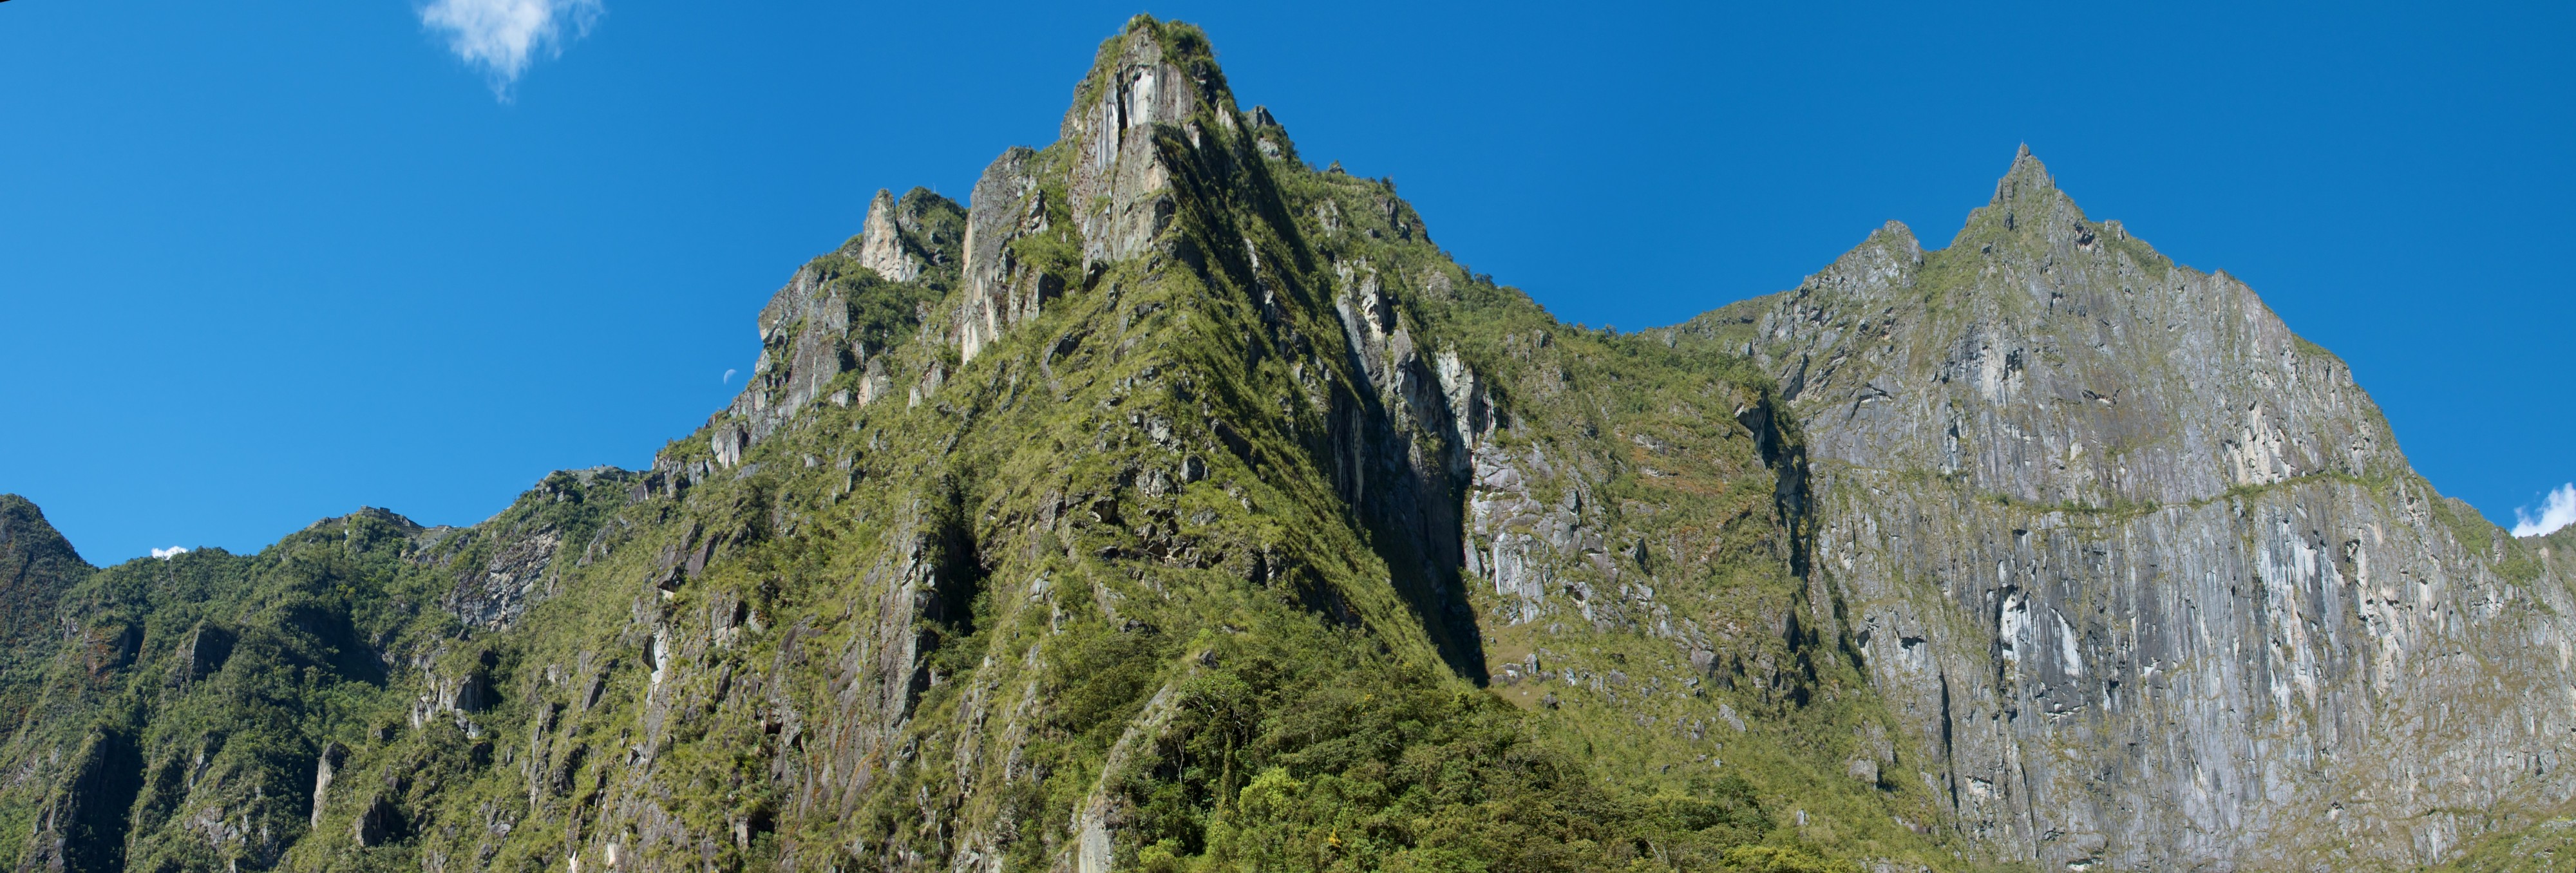 Peru - Salkantay Trek 154 - looking up the cliffs at Machu Picchu (7158991293)